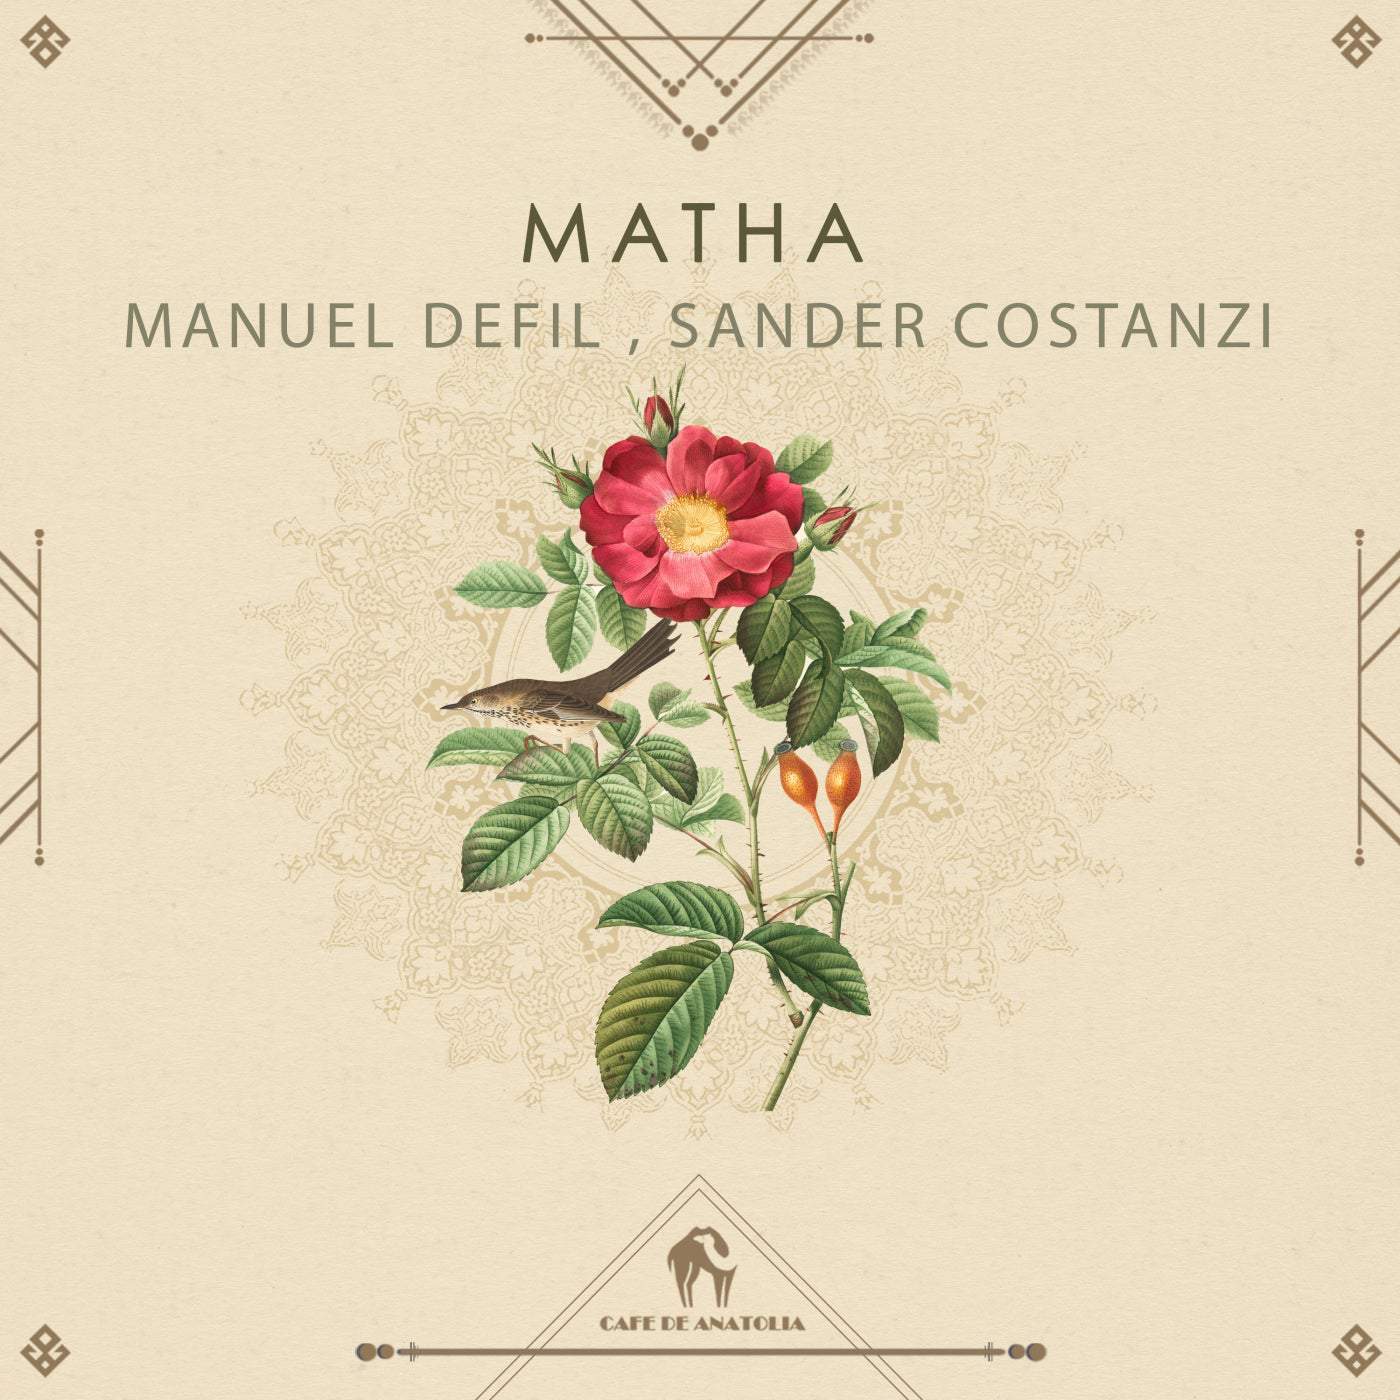 Download Sander Costanzi, Manuel Defil, Cafe De Anatolia - Matha on Electrobuzz